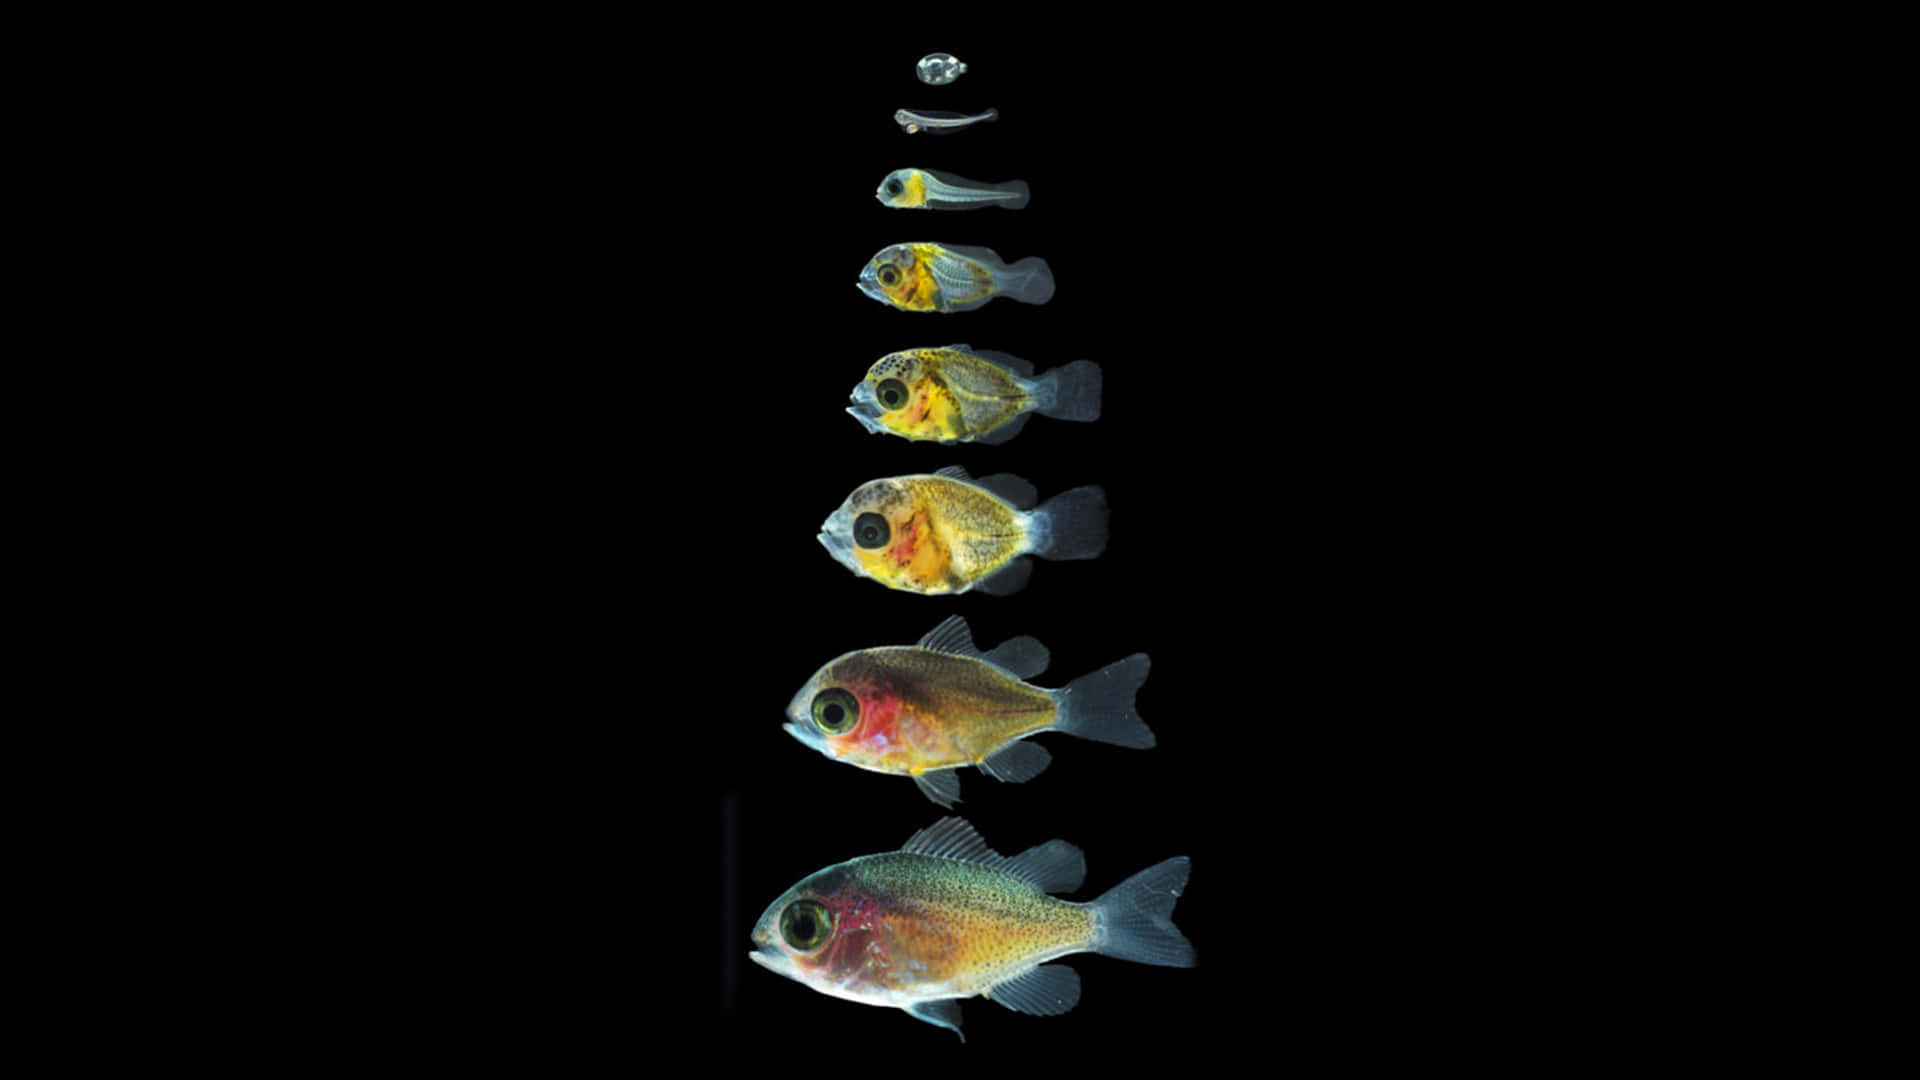 Chromis Fish Development Stages Wallpaper